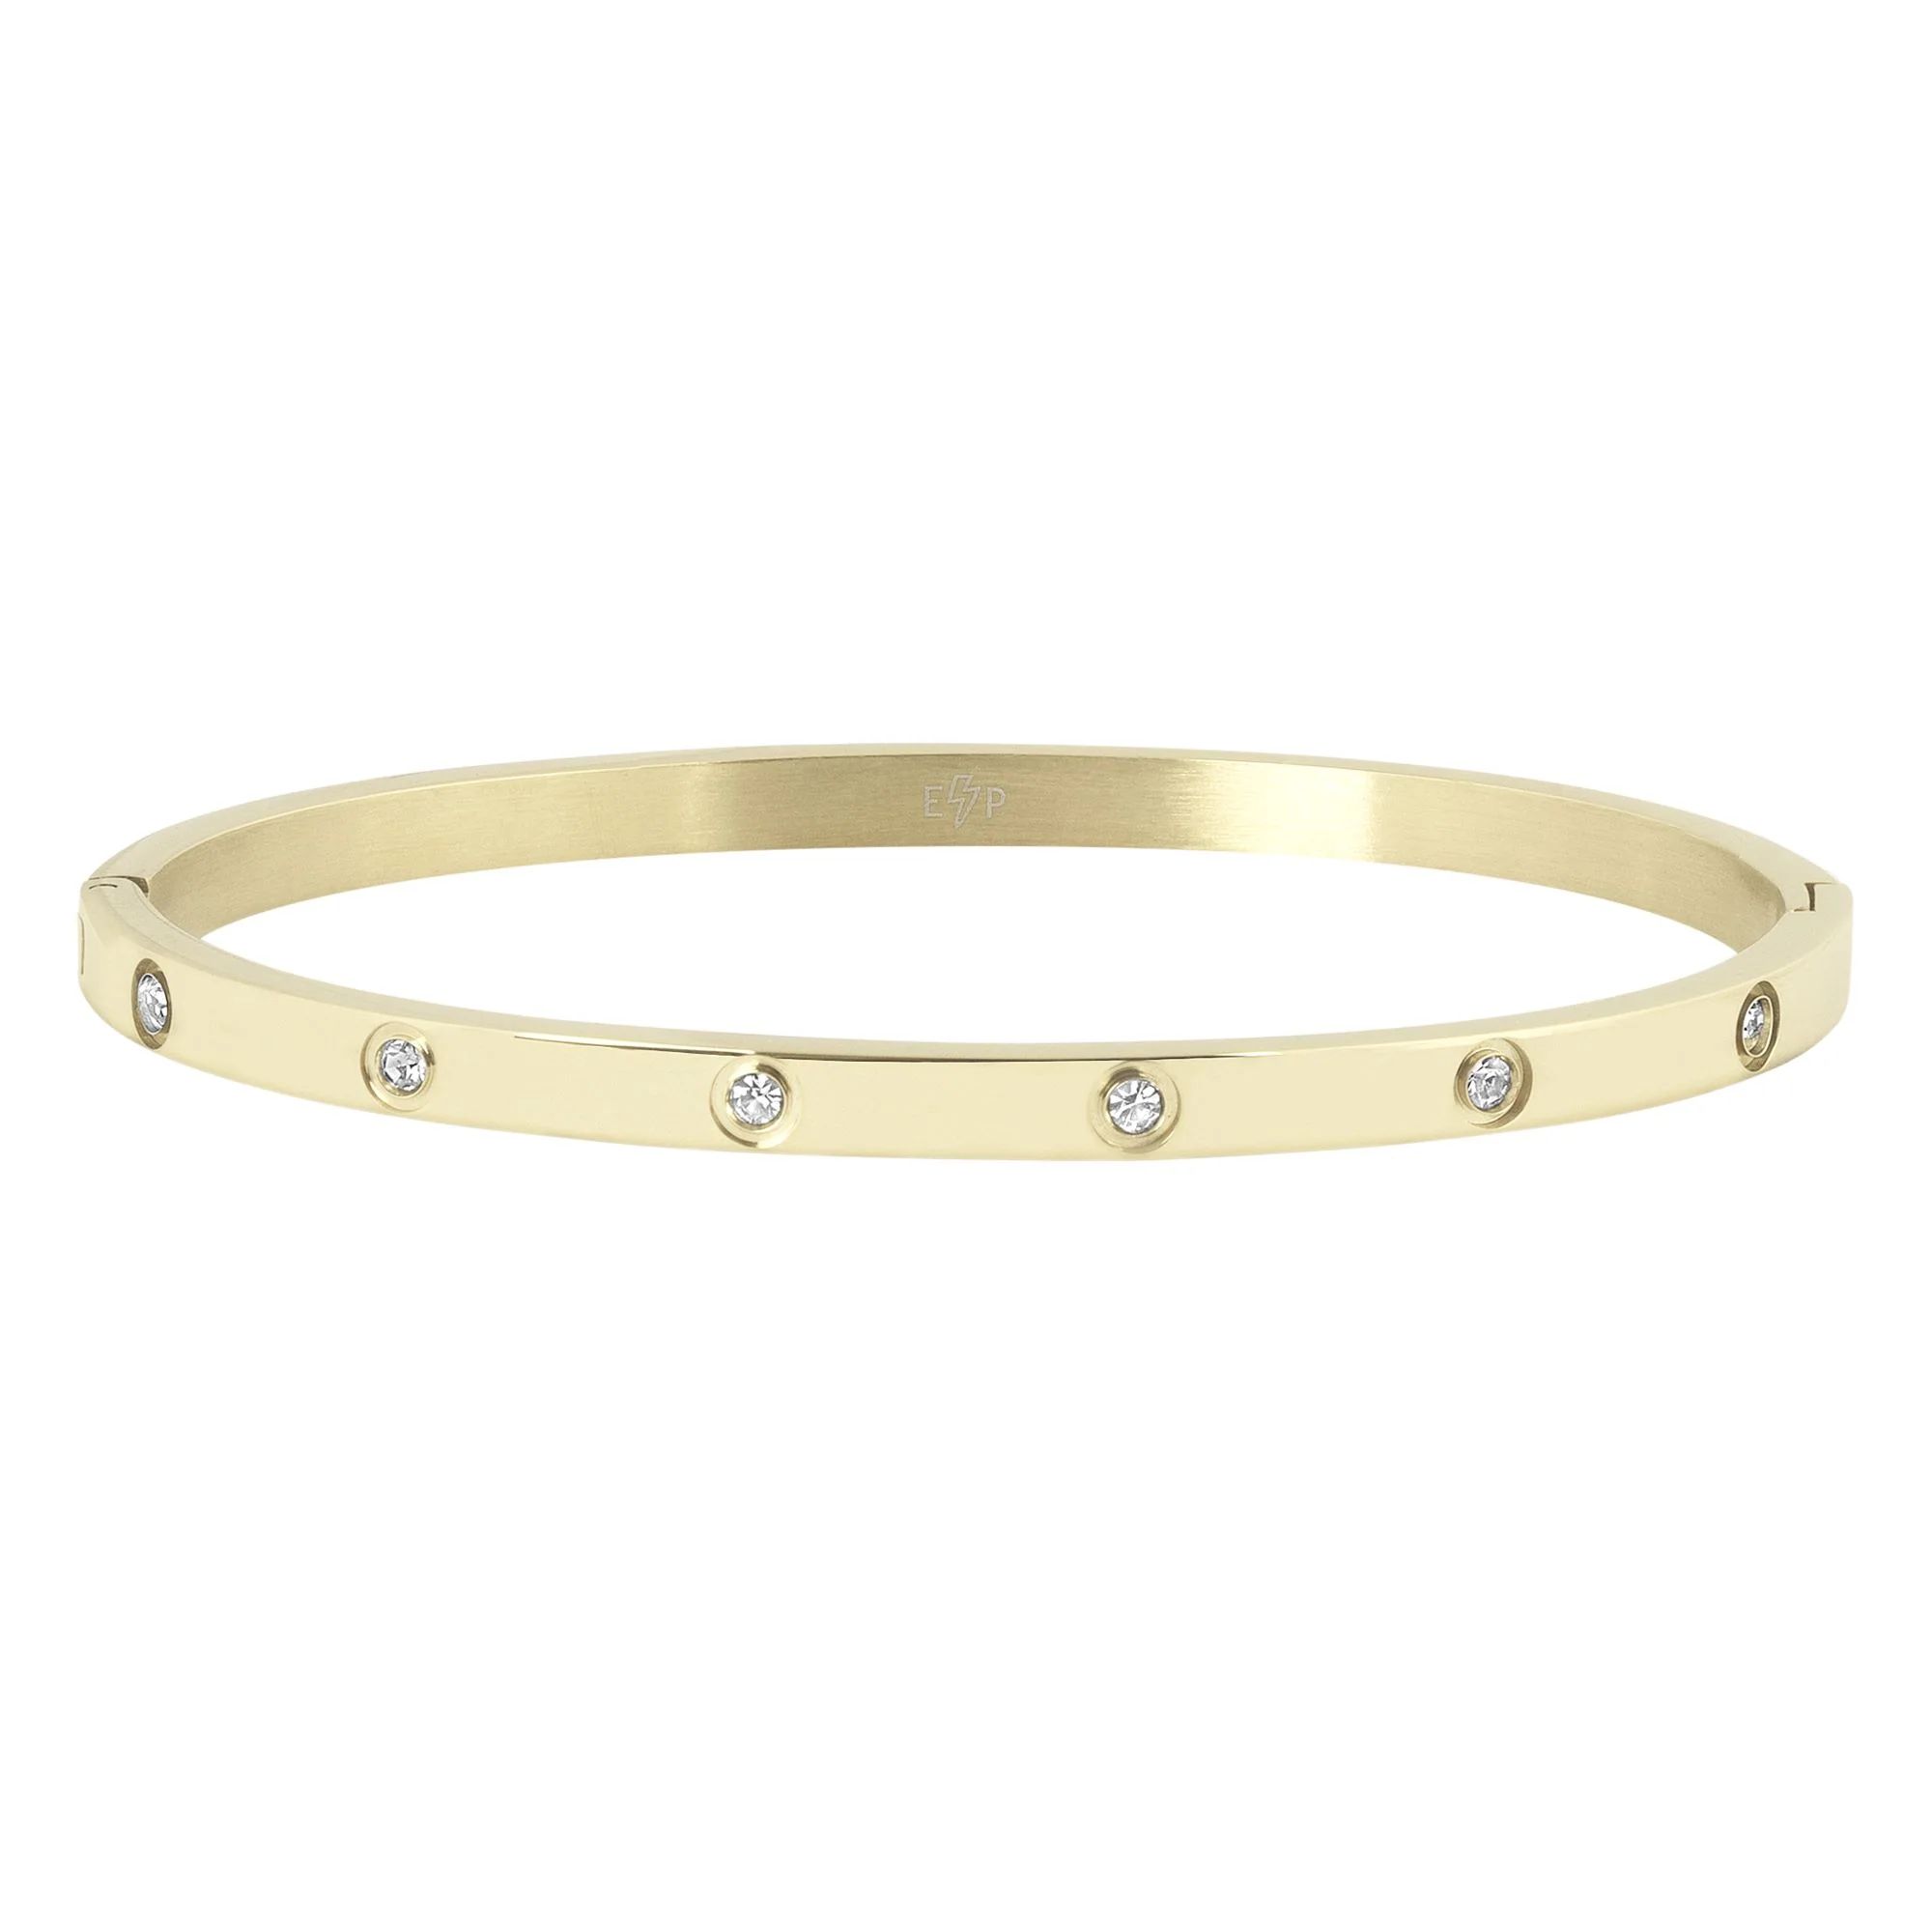 Dash(ing) Bracelet | Electric Picks Jewelry